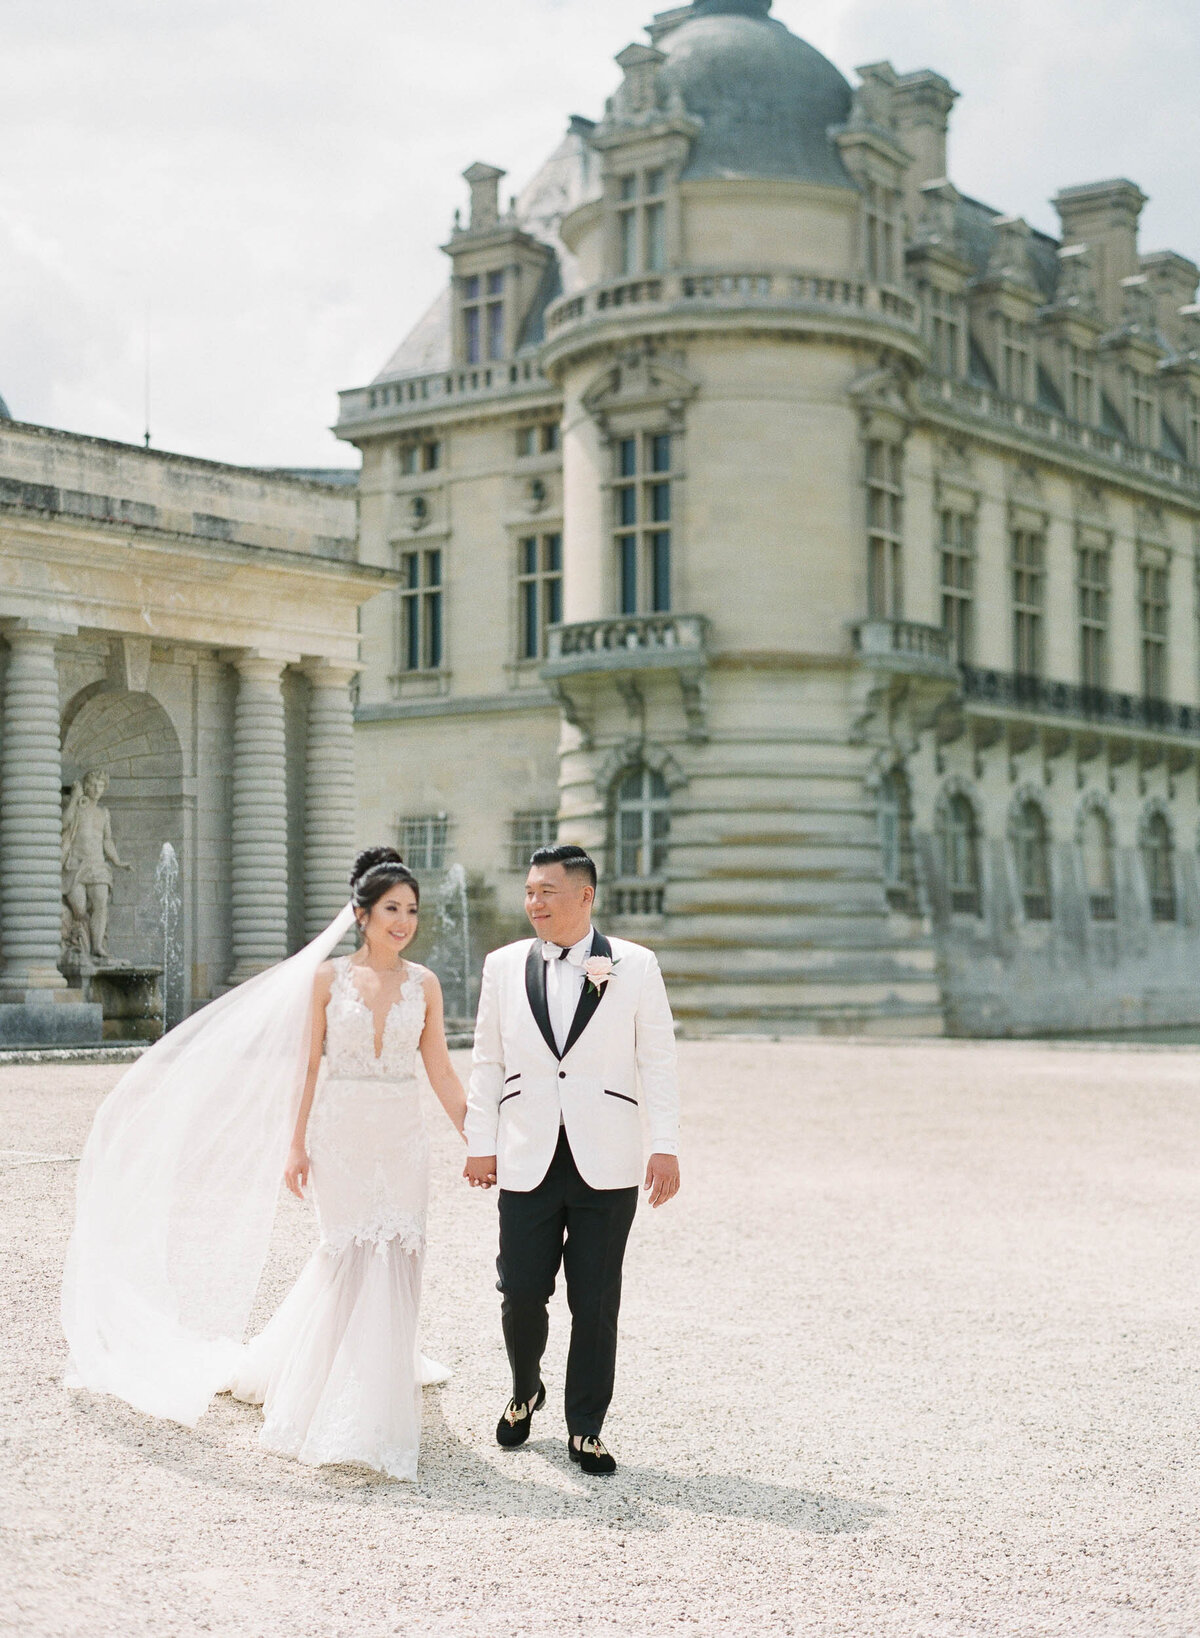 20-Chateau-de-Chantilly-wedding-couple-portrait-Alexandra-Vonk-photography